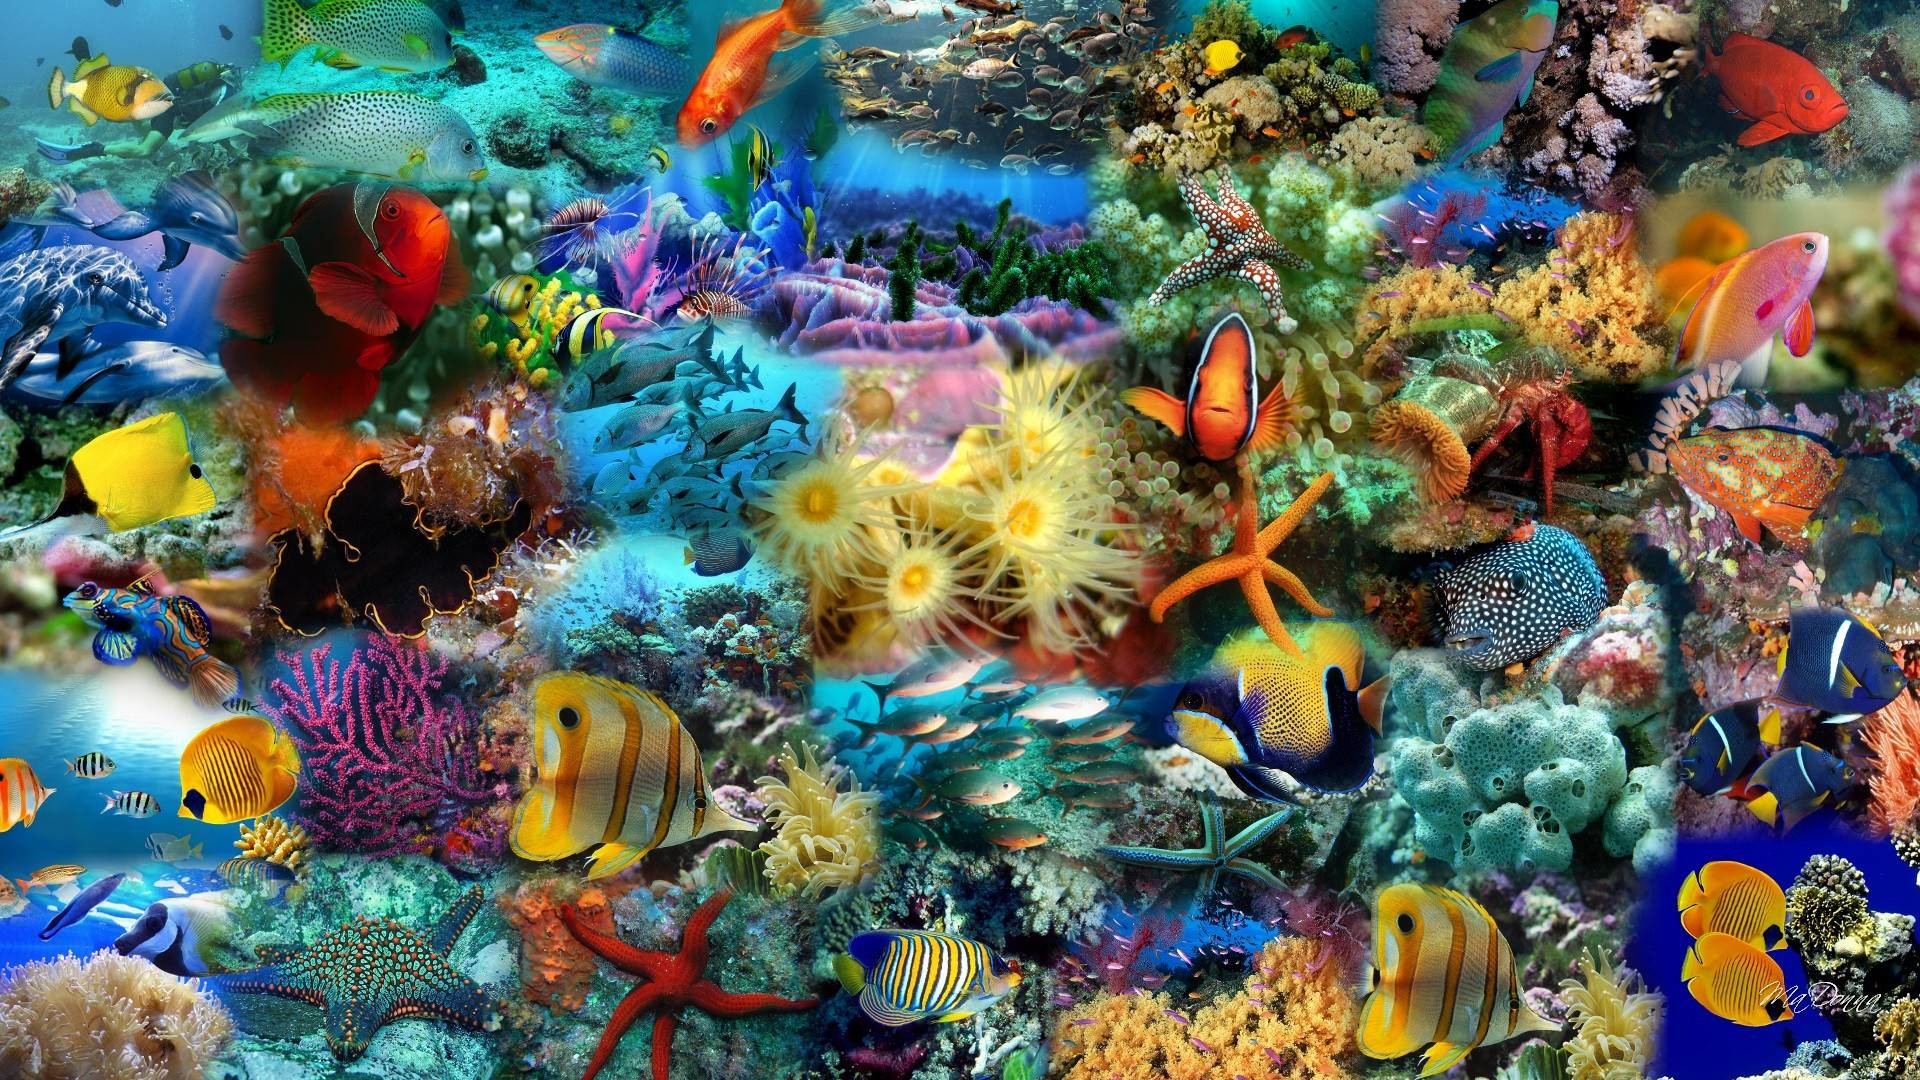 water fish wallpaper free download,coral reef,reef,marine biology,natural environment,coral reef fish